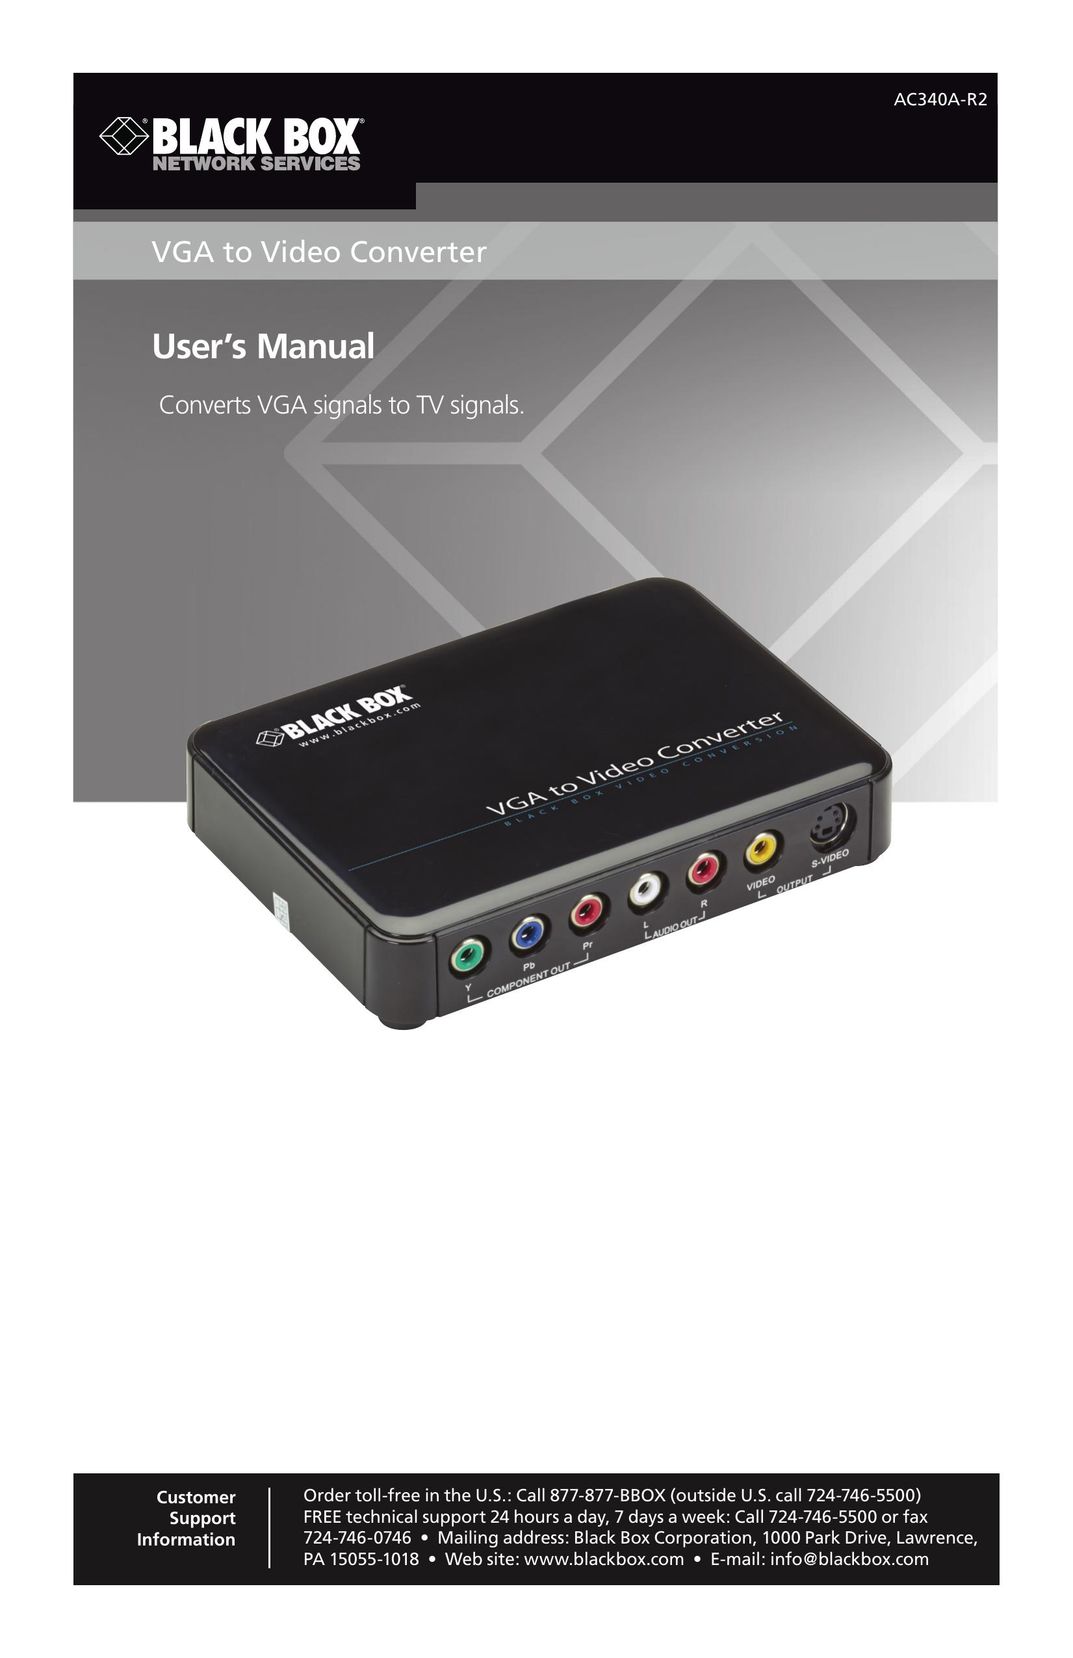 Black Box BLACK BOX VGA to Video Converter TV Video Accessories User Manual